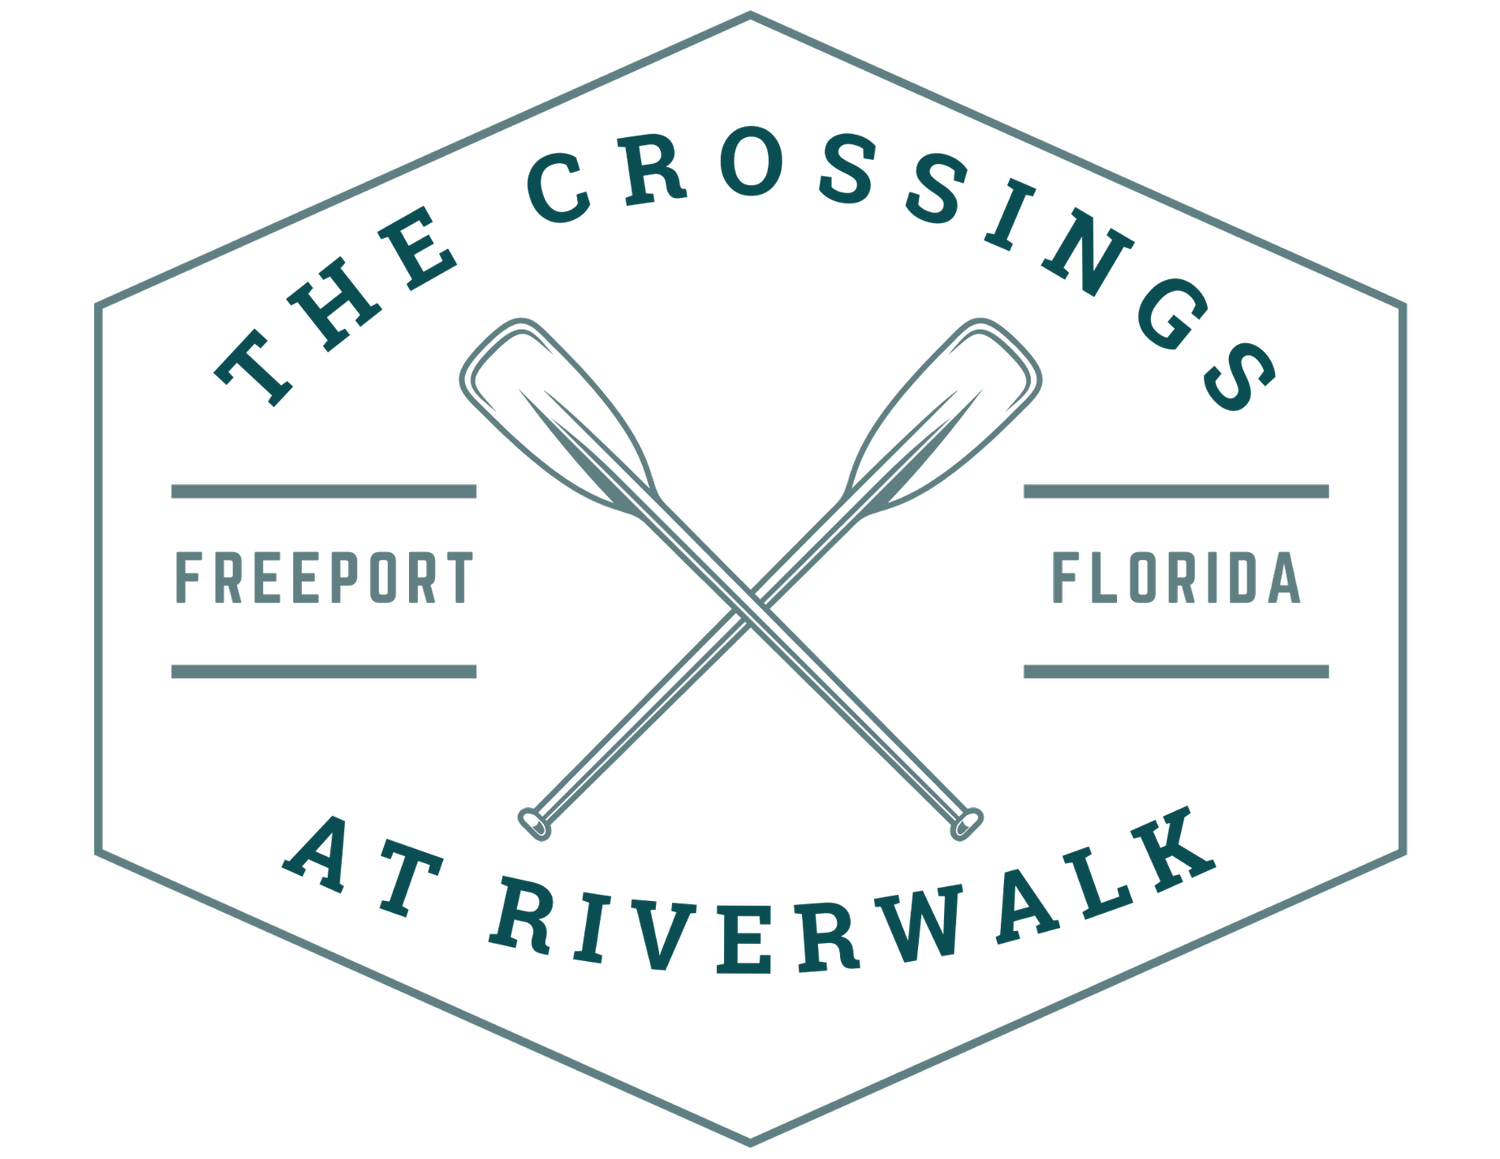 The Crossings at Riverwalk